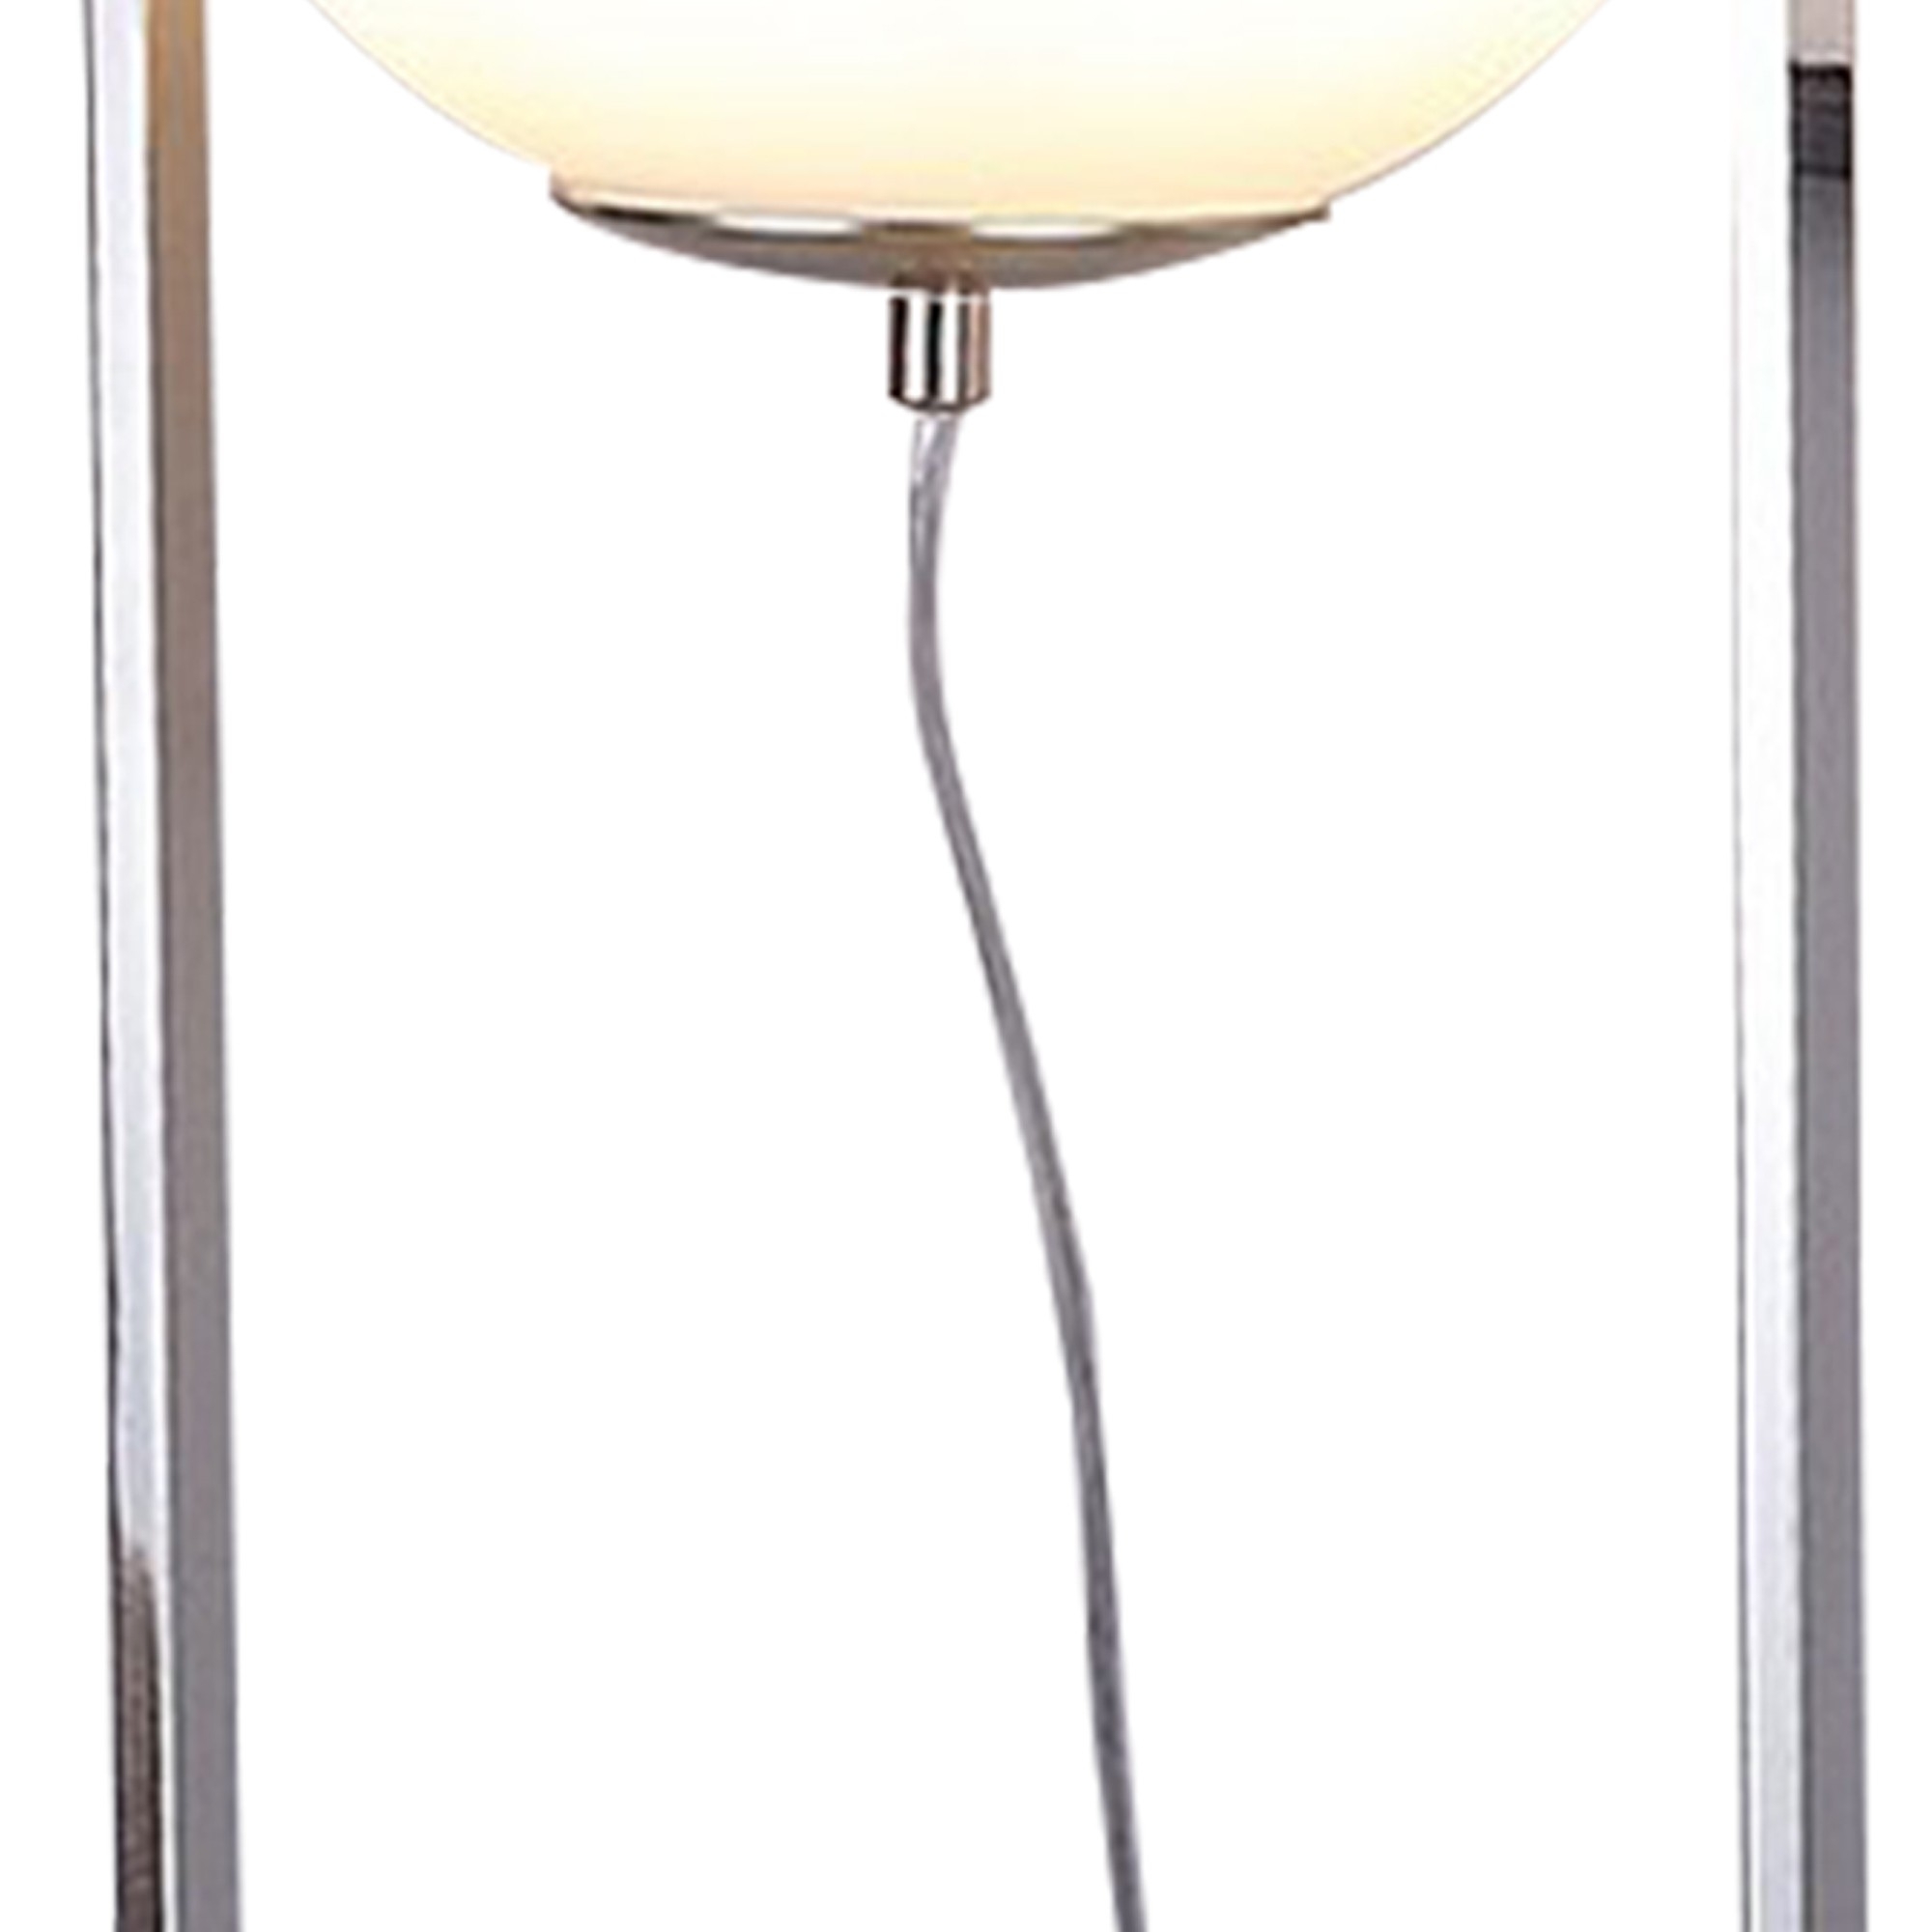 Jim 22 Inch Table Lamp, LED Light, Metal Body, Modern Globe Shade, Silver -Saltoro Sherpi